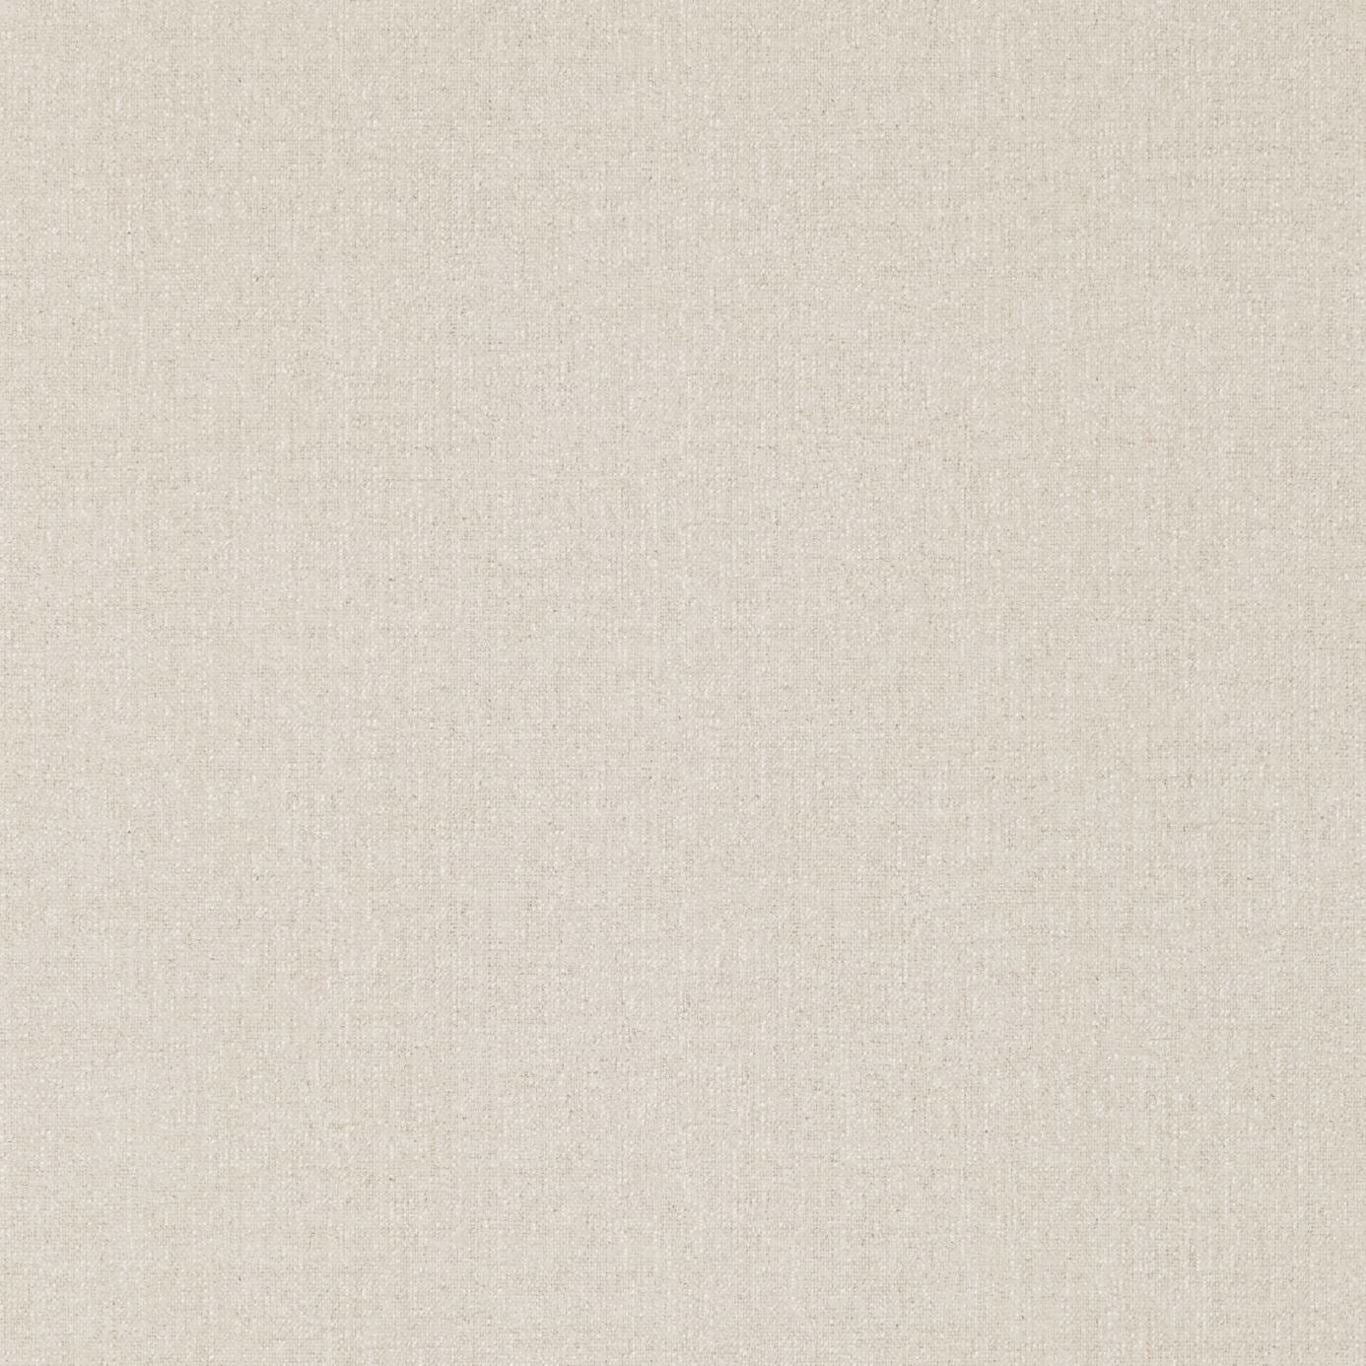 Soho Plain Soft Grey Wallpaper DSOH215449 by Sanderson